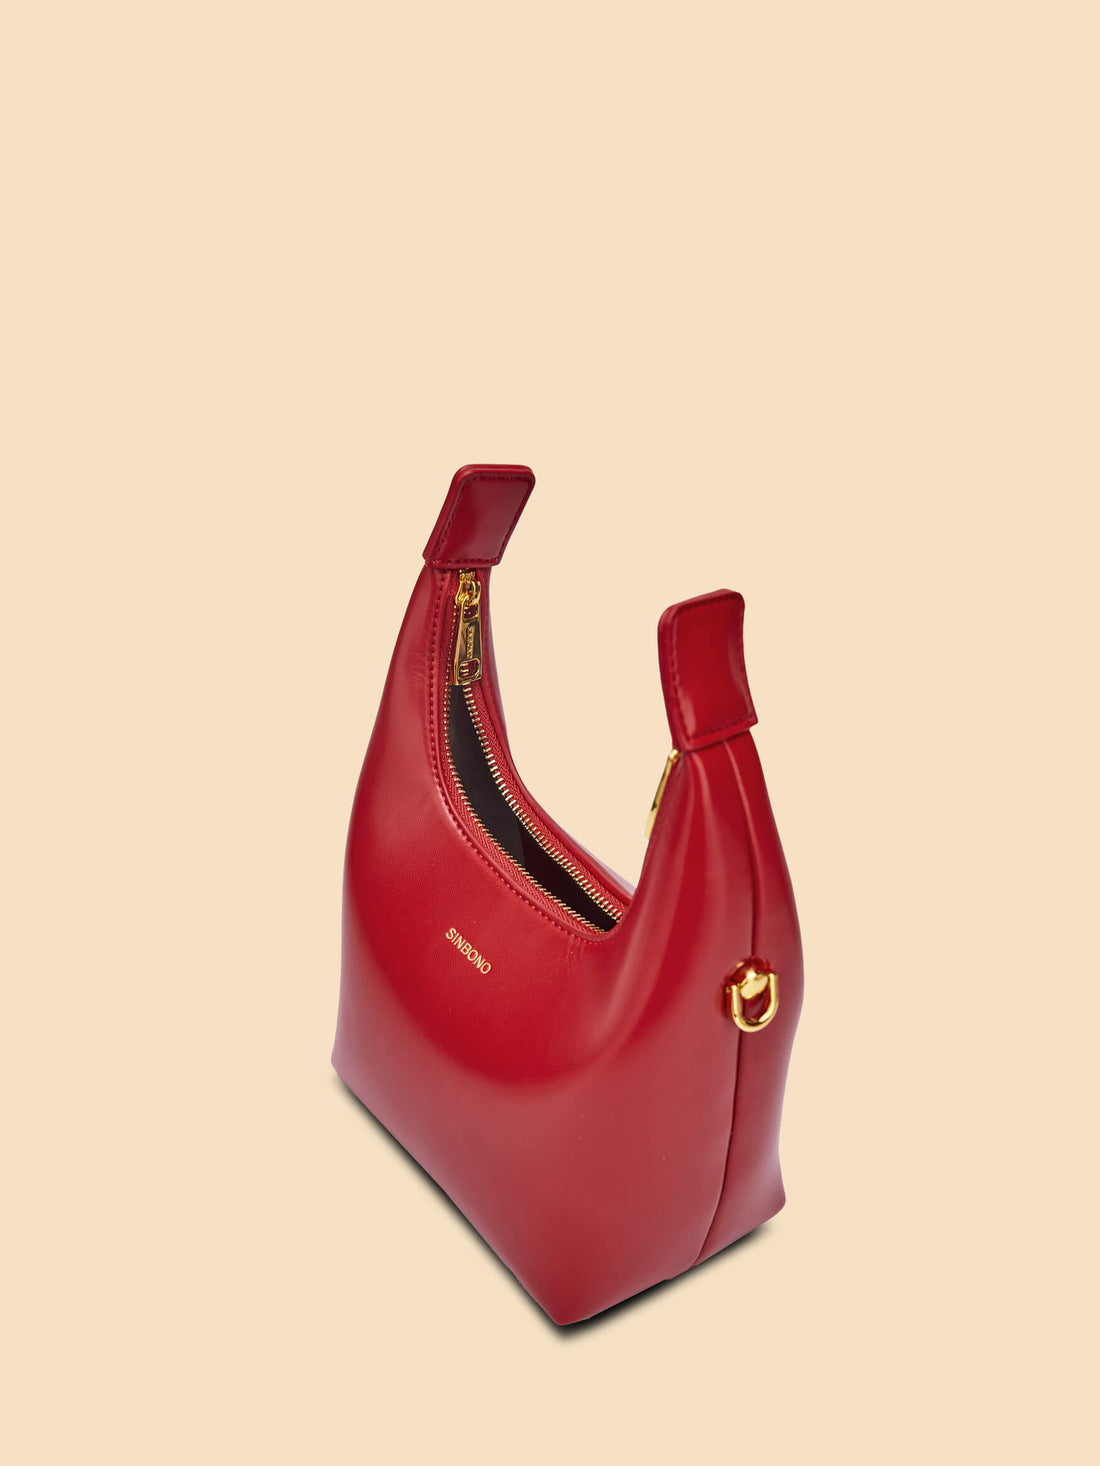 SINBONO Vienna Red Leather Handbags -Vegan Leather Women Bag